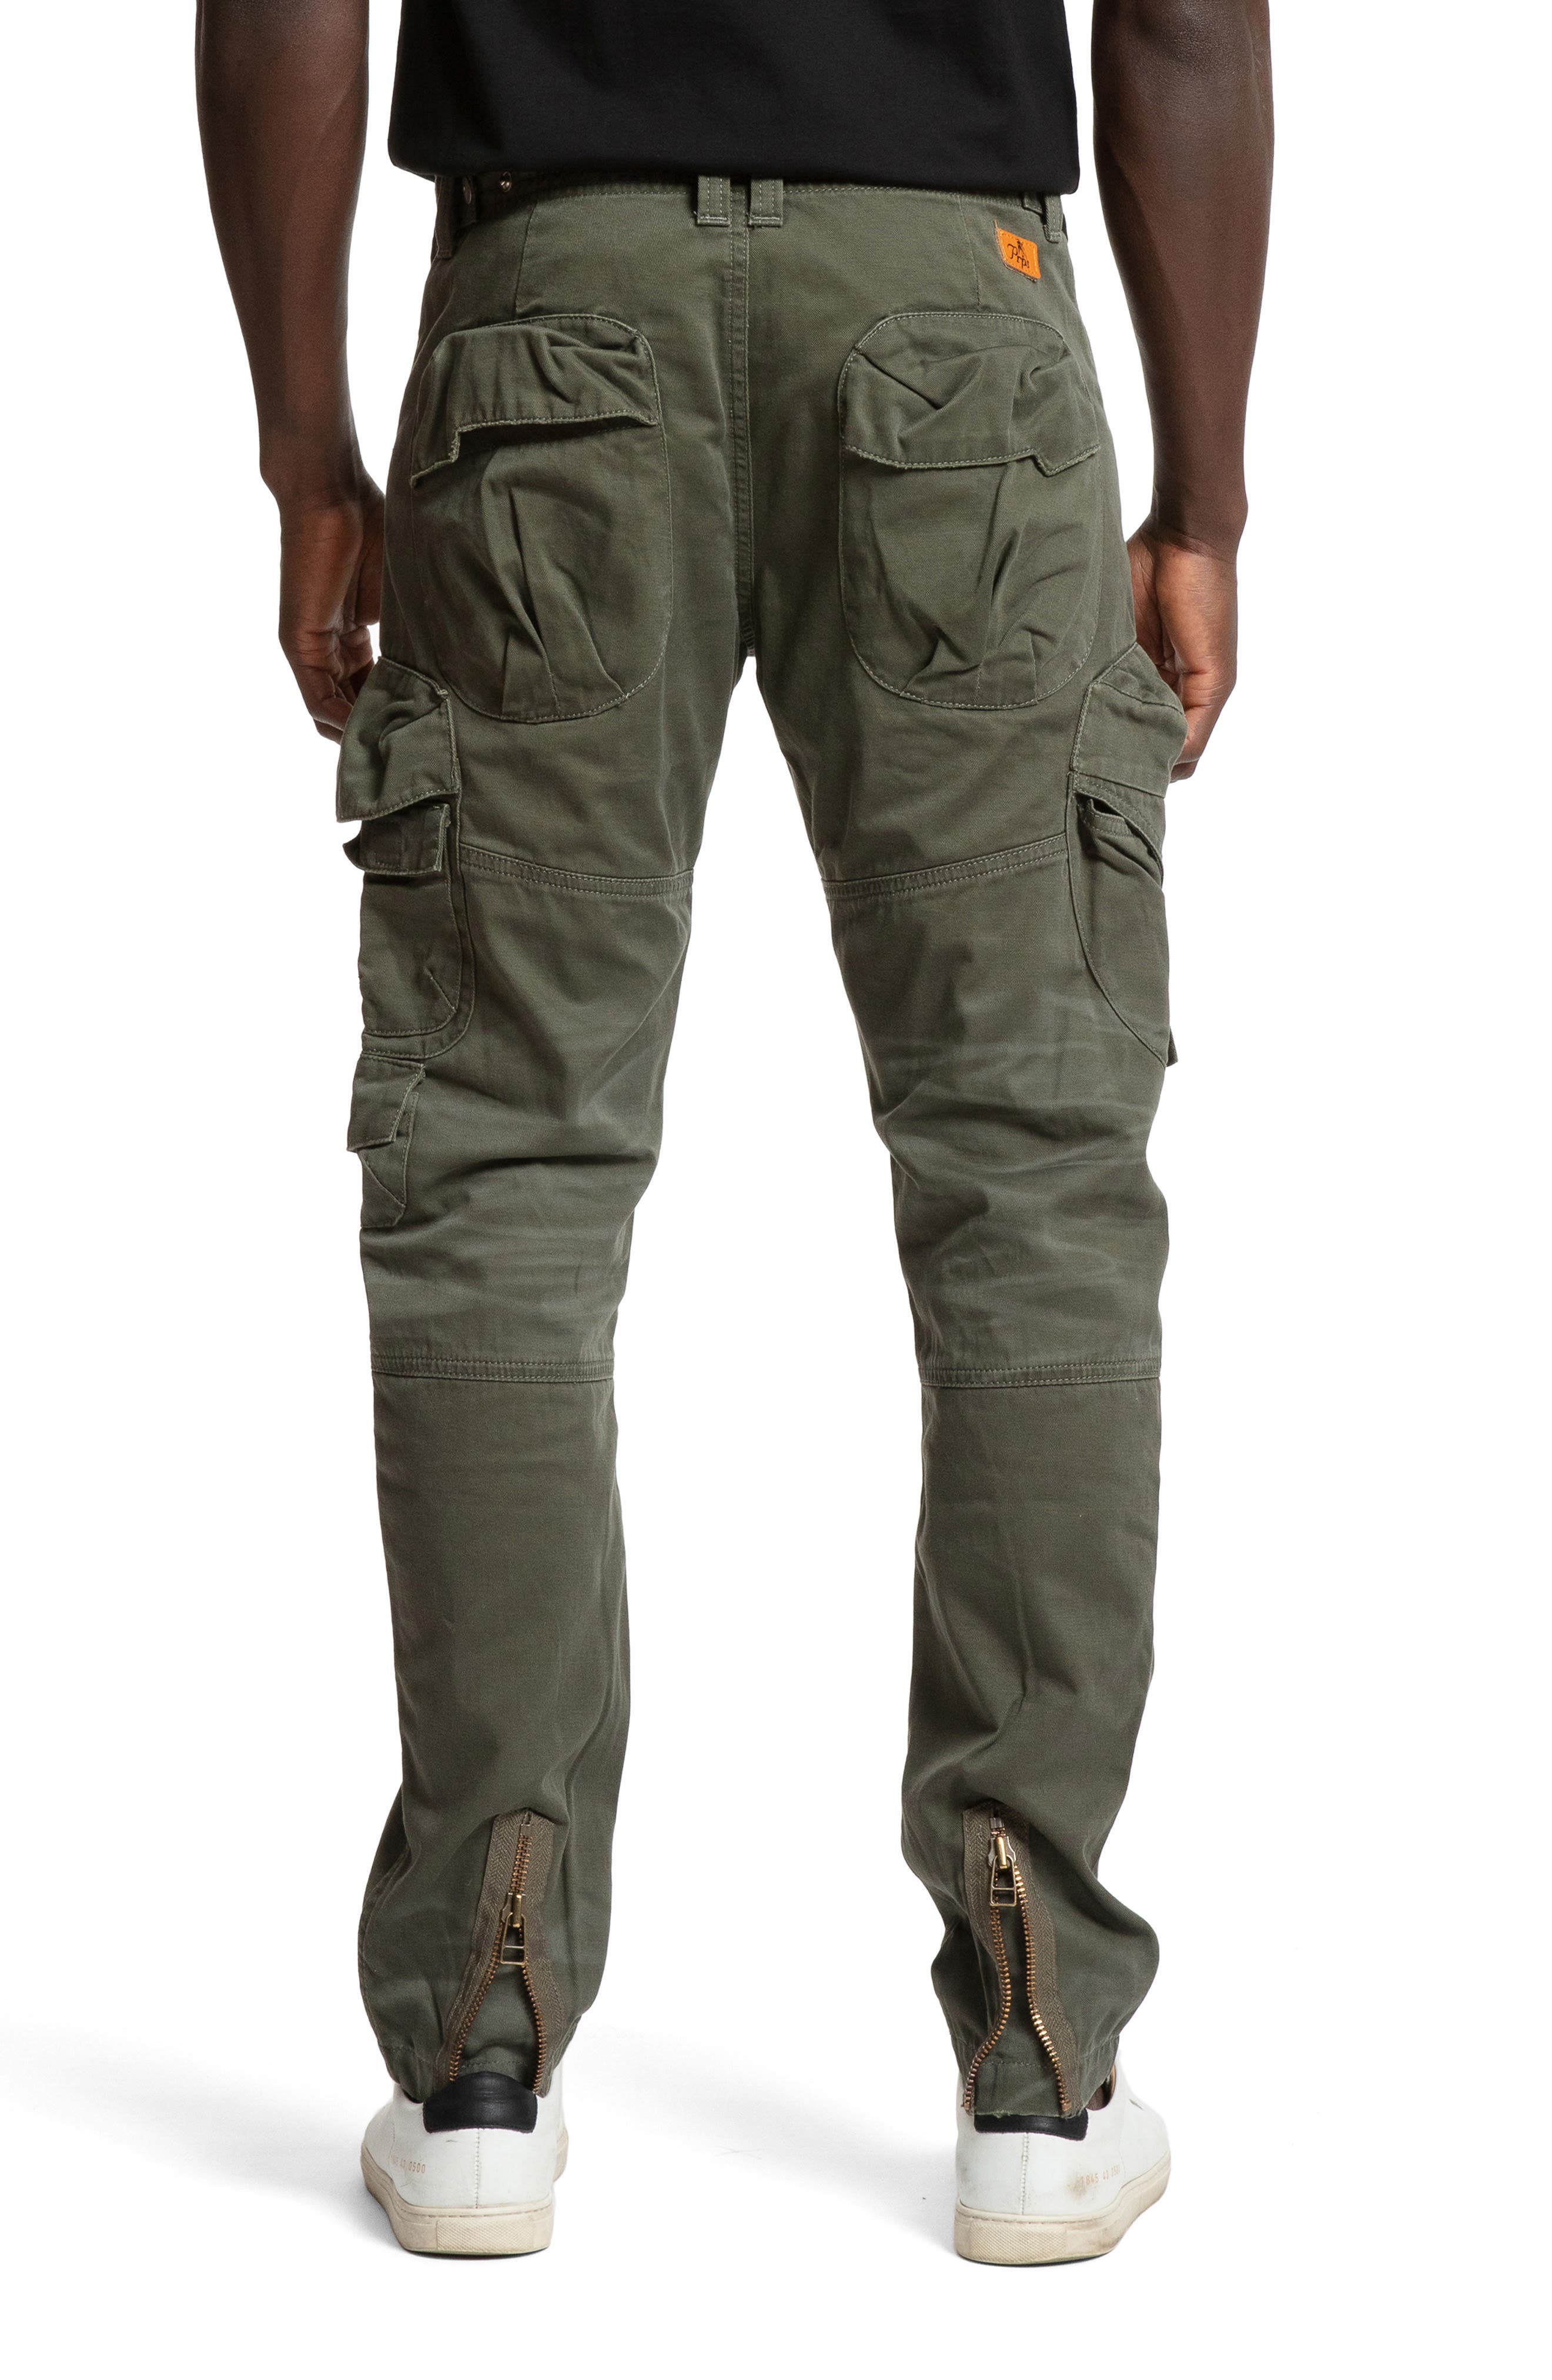 Knee Pad Pocket WORK TROUSERS Heavy Duty Pants Cargo Combat Style DECORATORS 